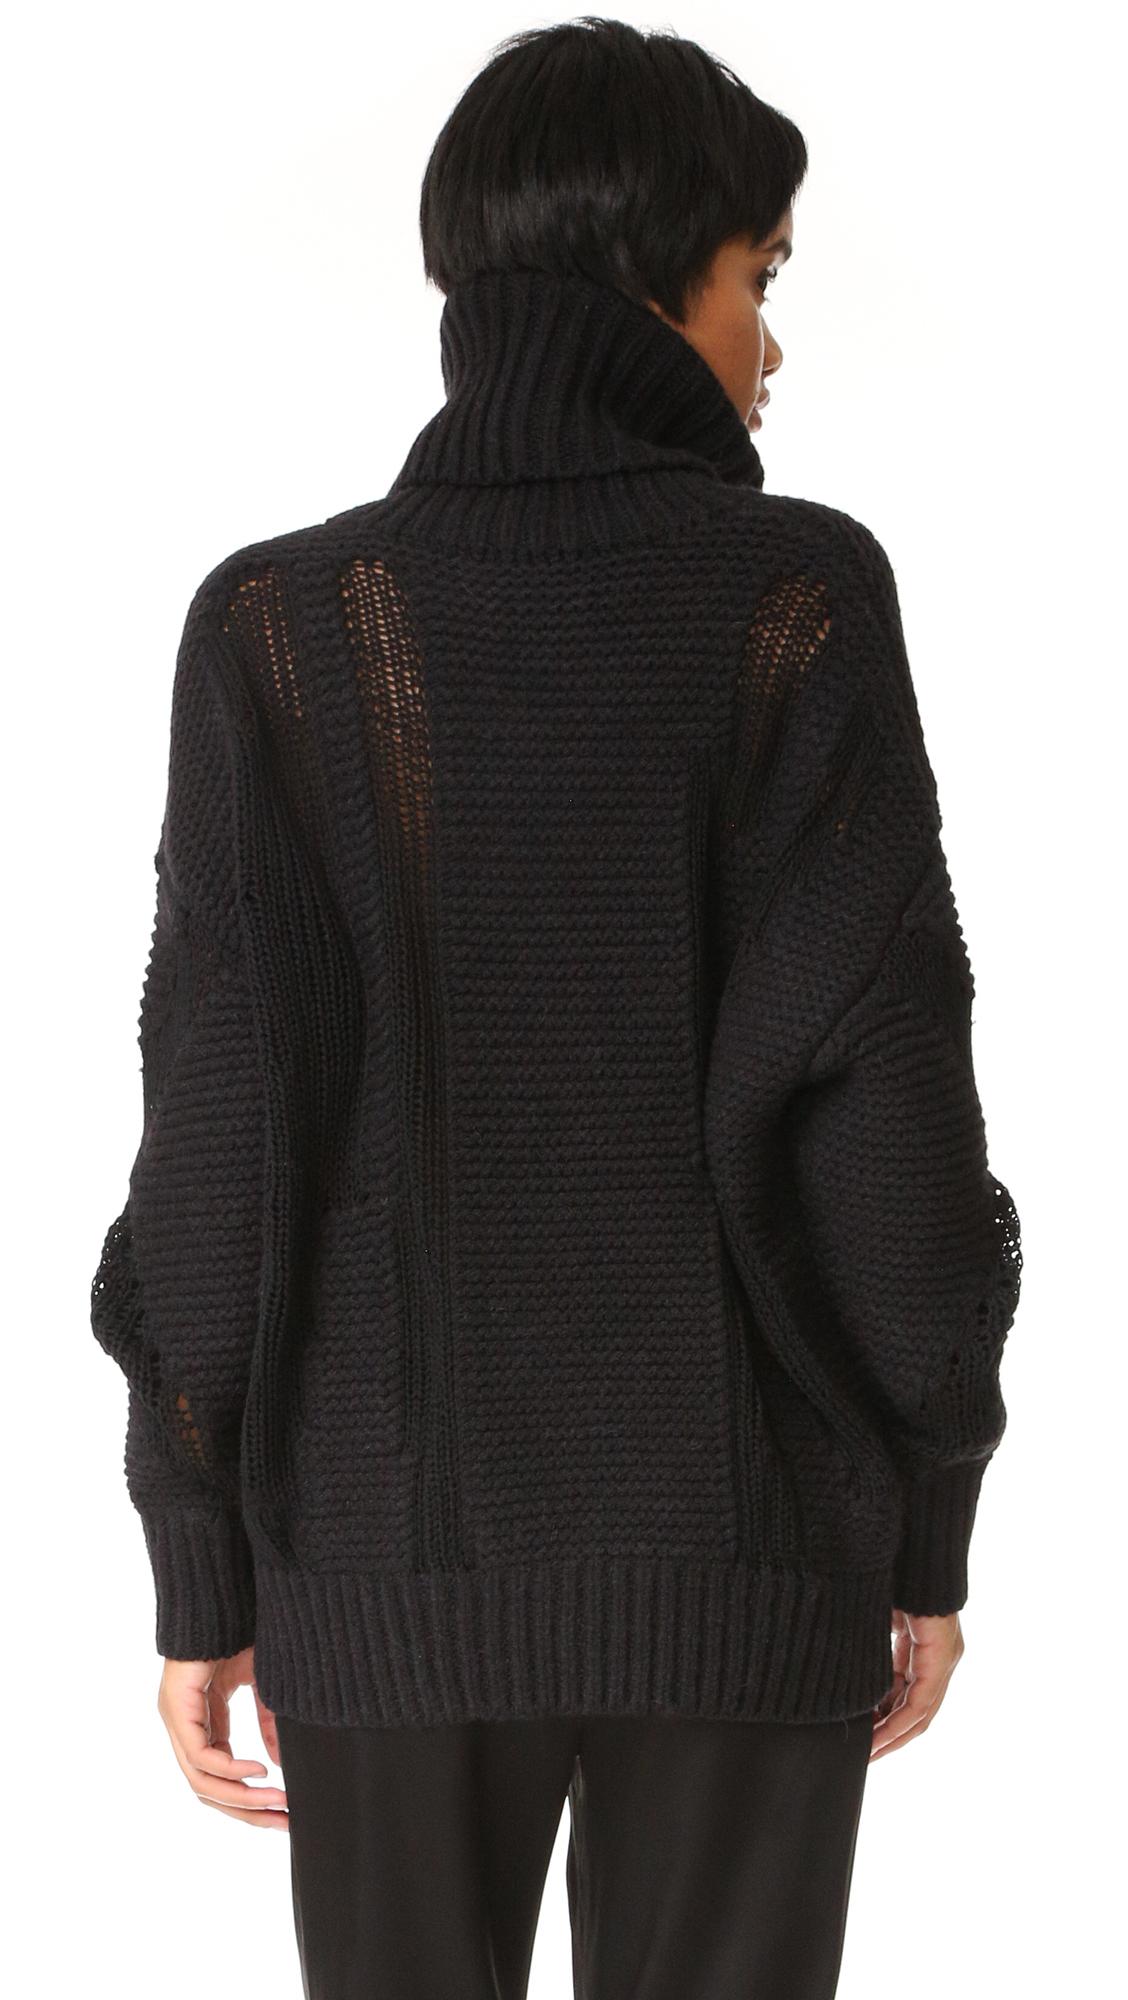 Lyst - Dkny Oversized Turtleneck Intarsia Sweater in Black